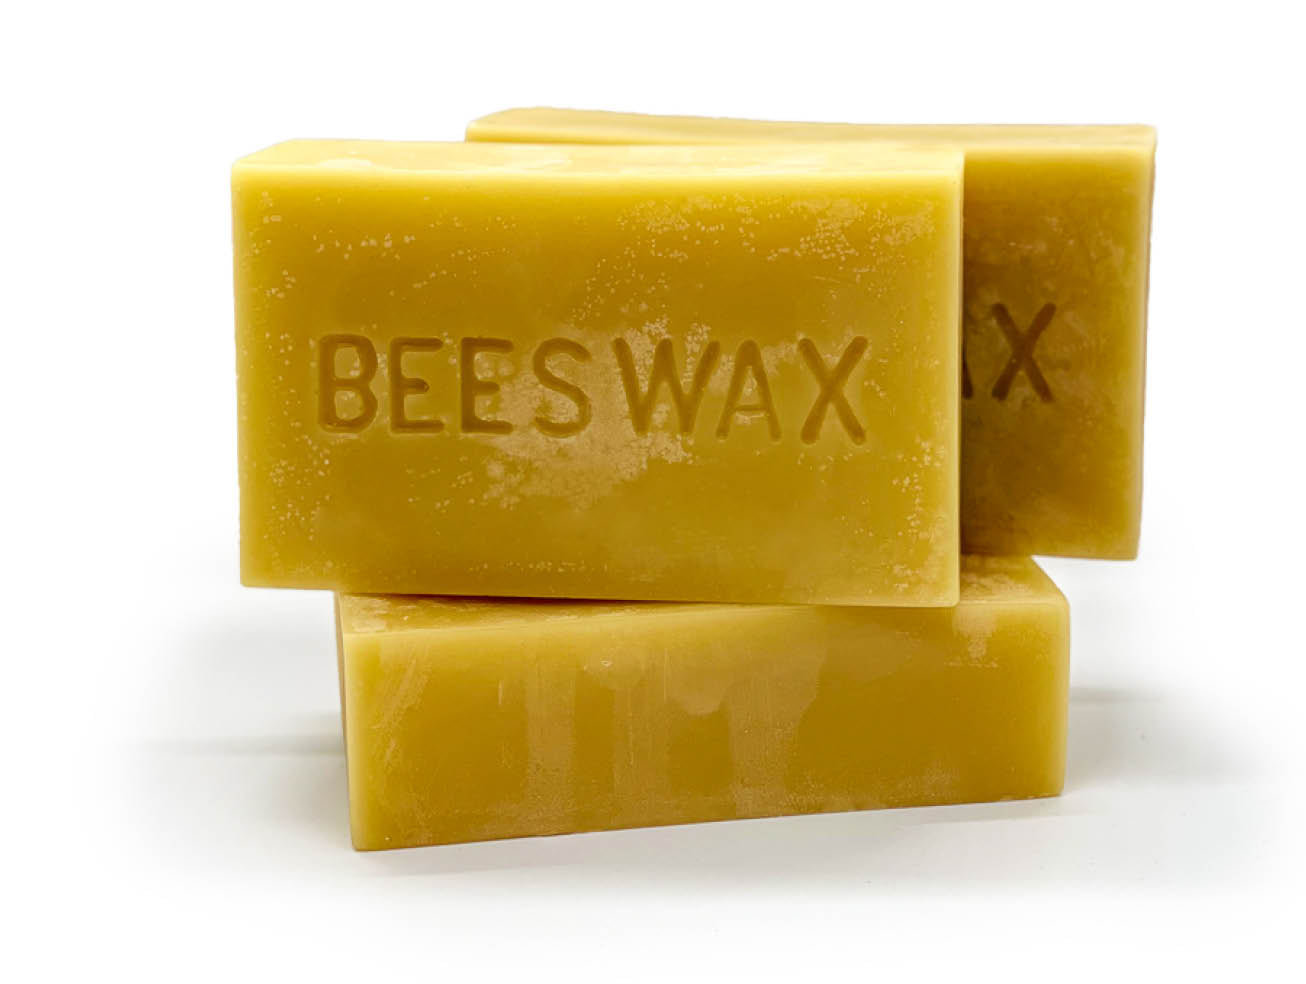 1 lb Beeswax Block